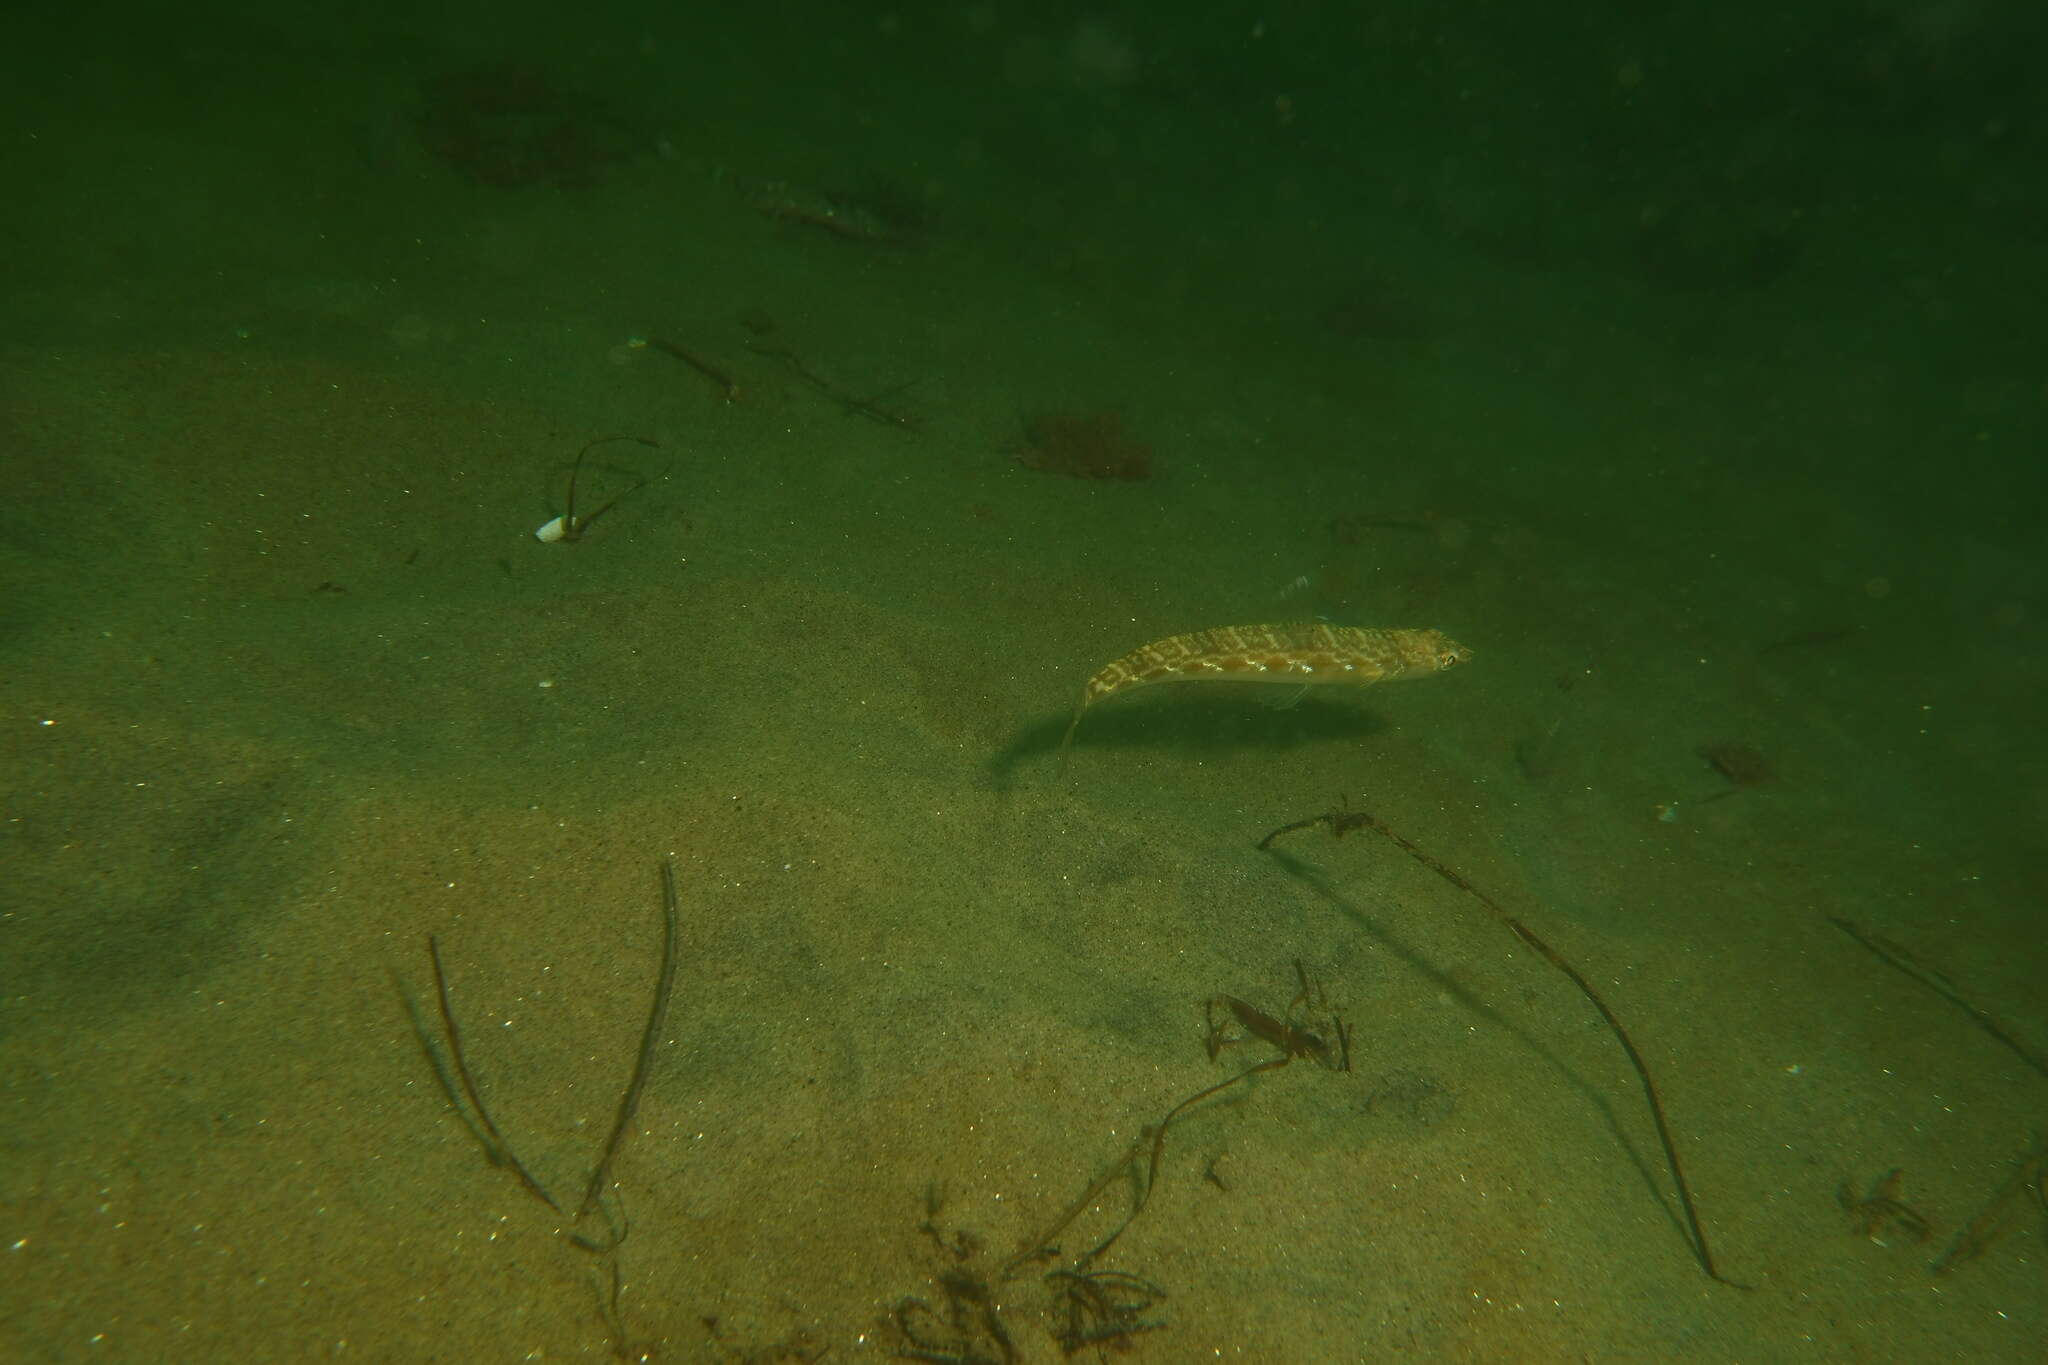 Image of California lizardfish